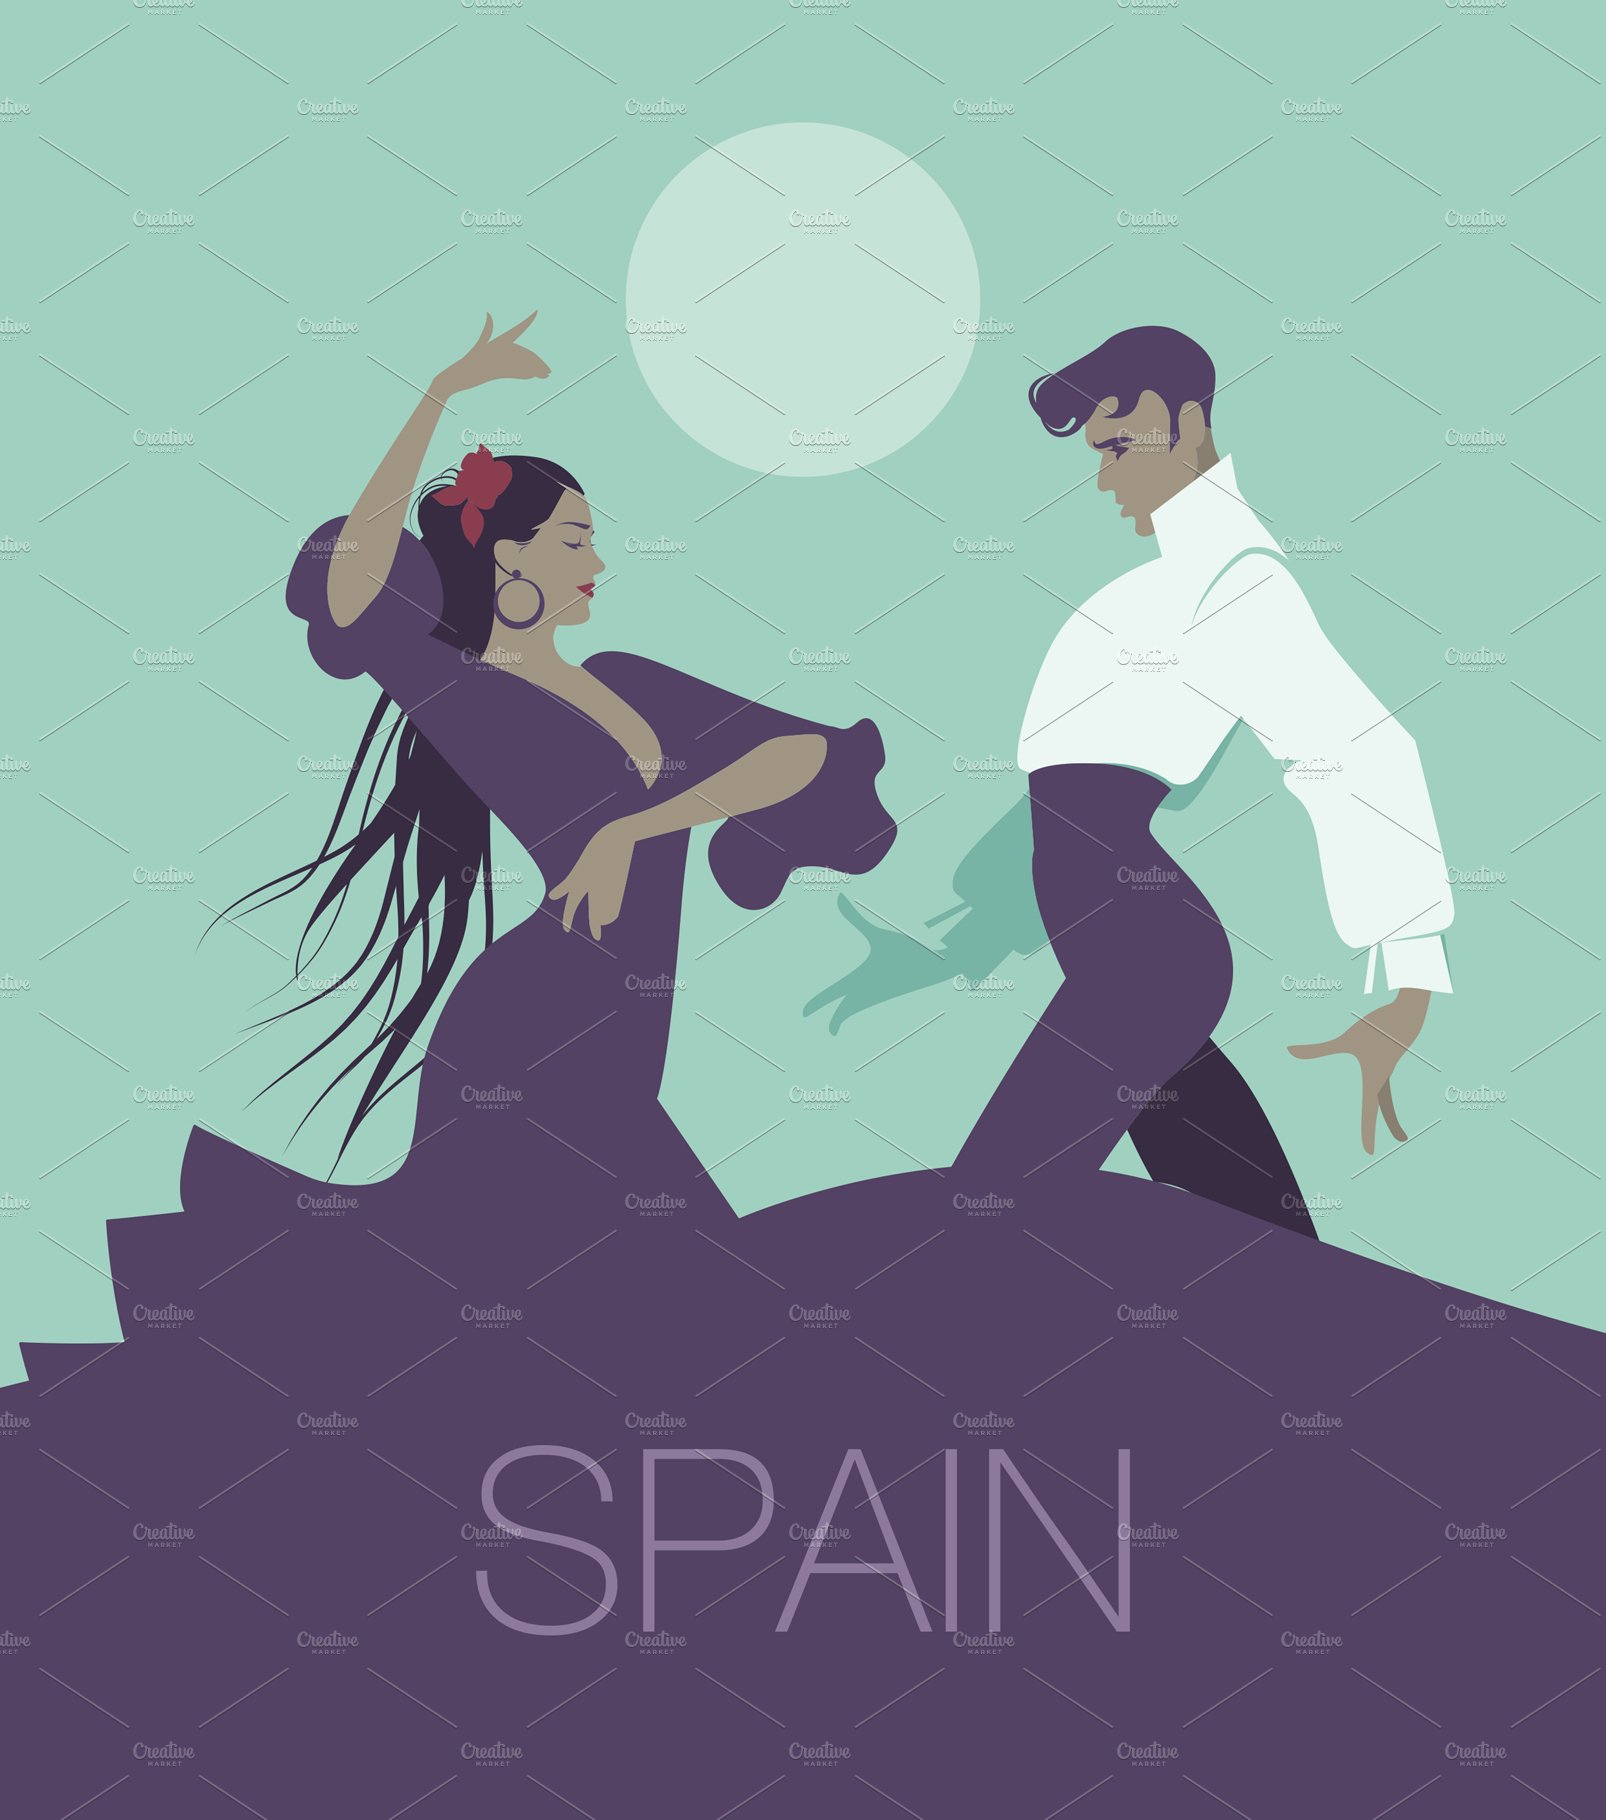 Couple of Flamenco dancers II cover image.